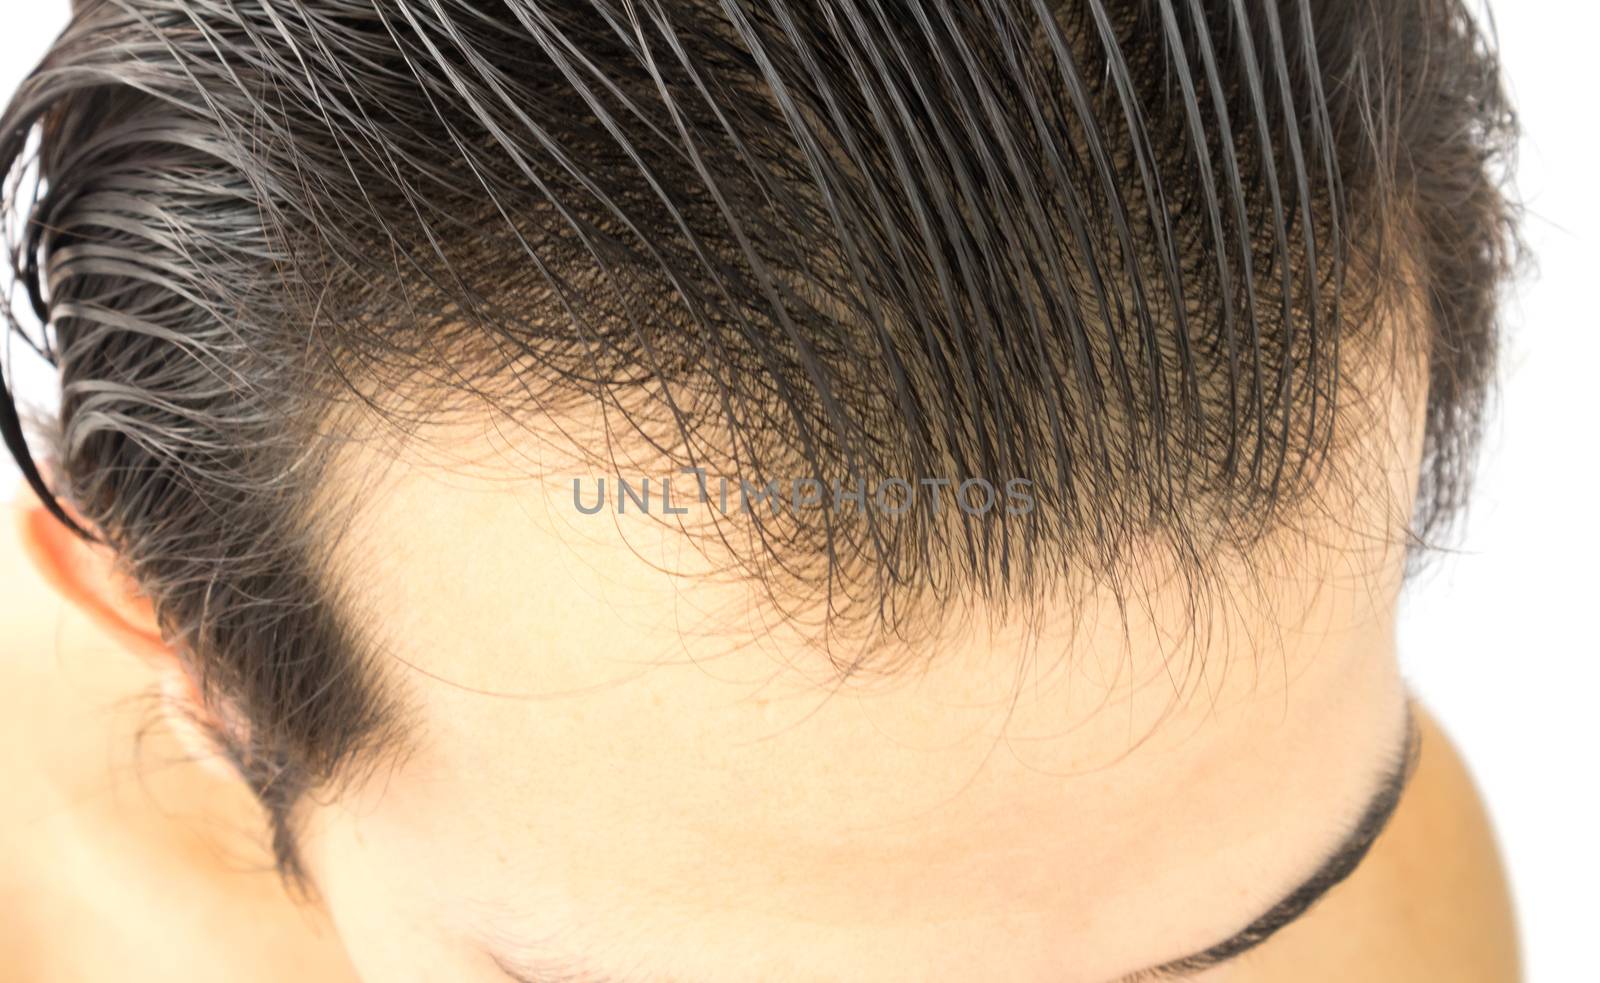 Closeup young man serious hair loss problem for health care sham by pt.pongsak@gmail.com